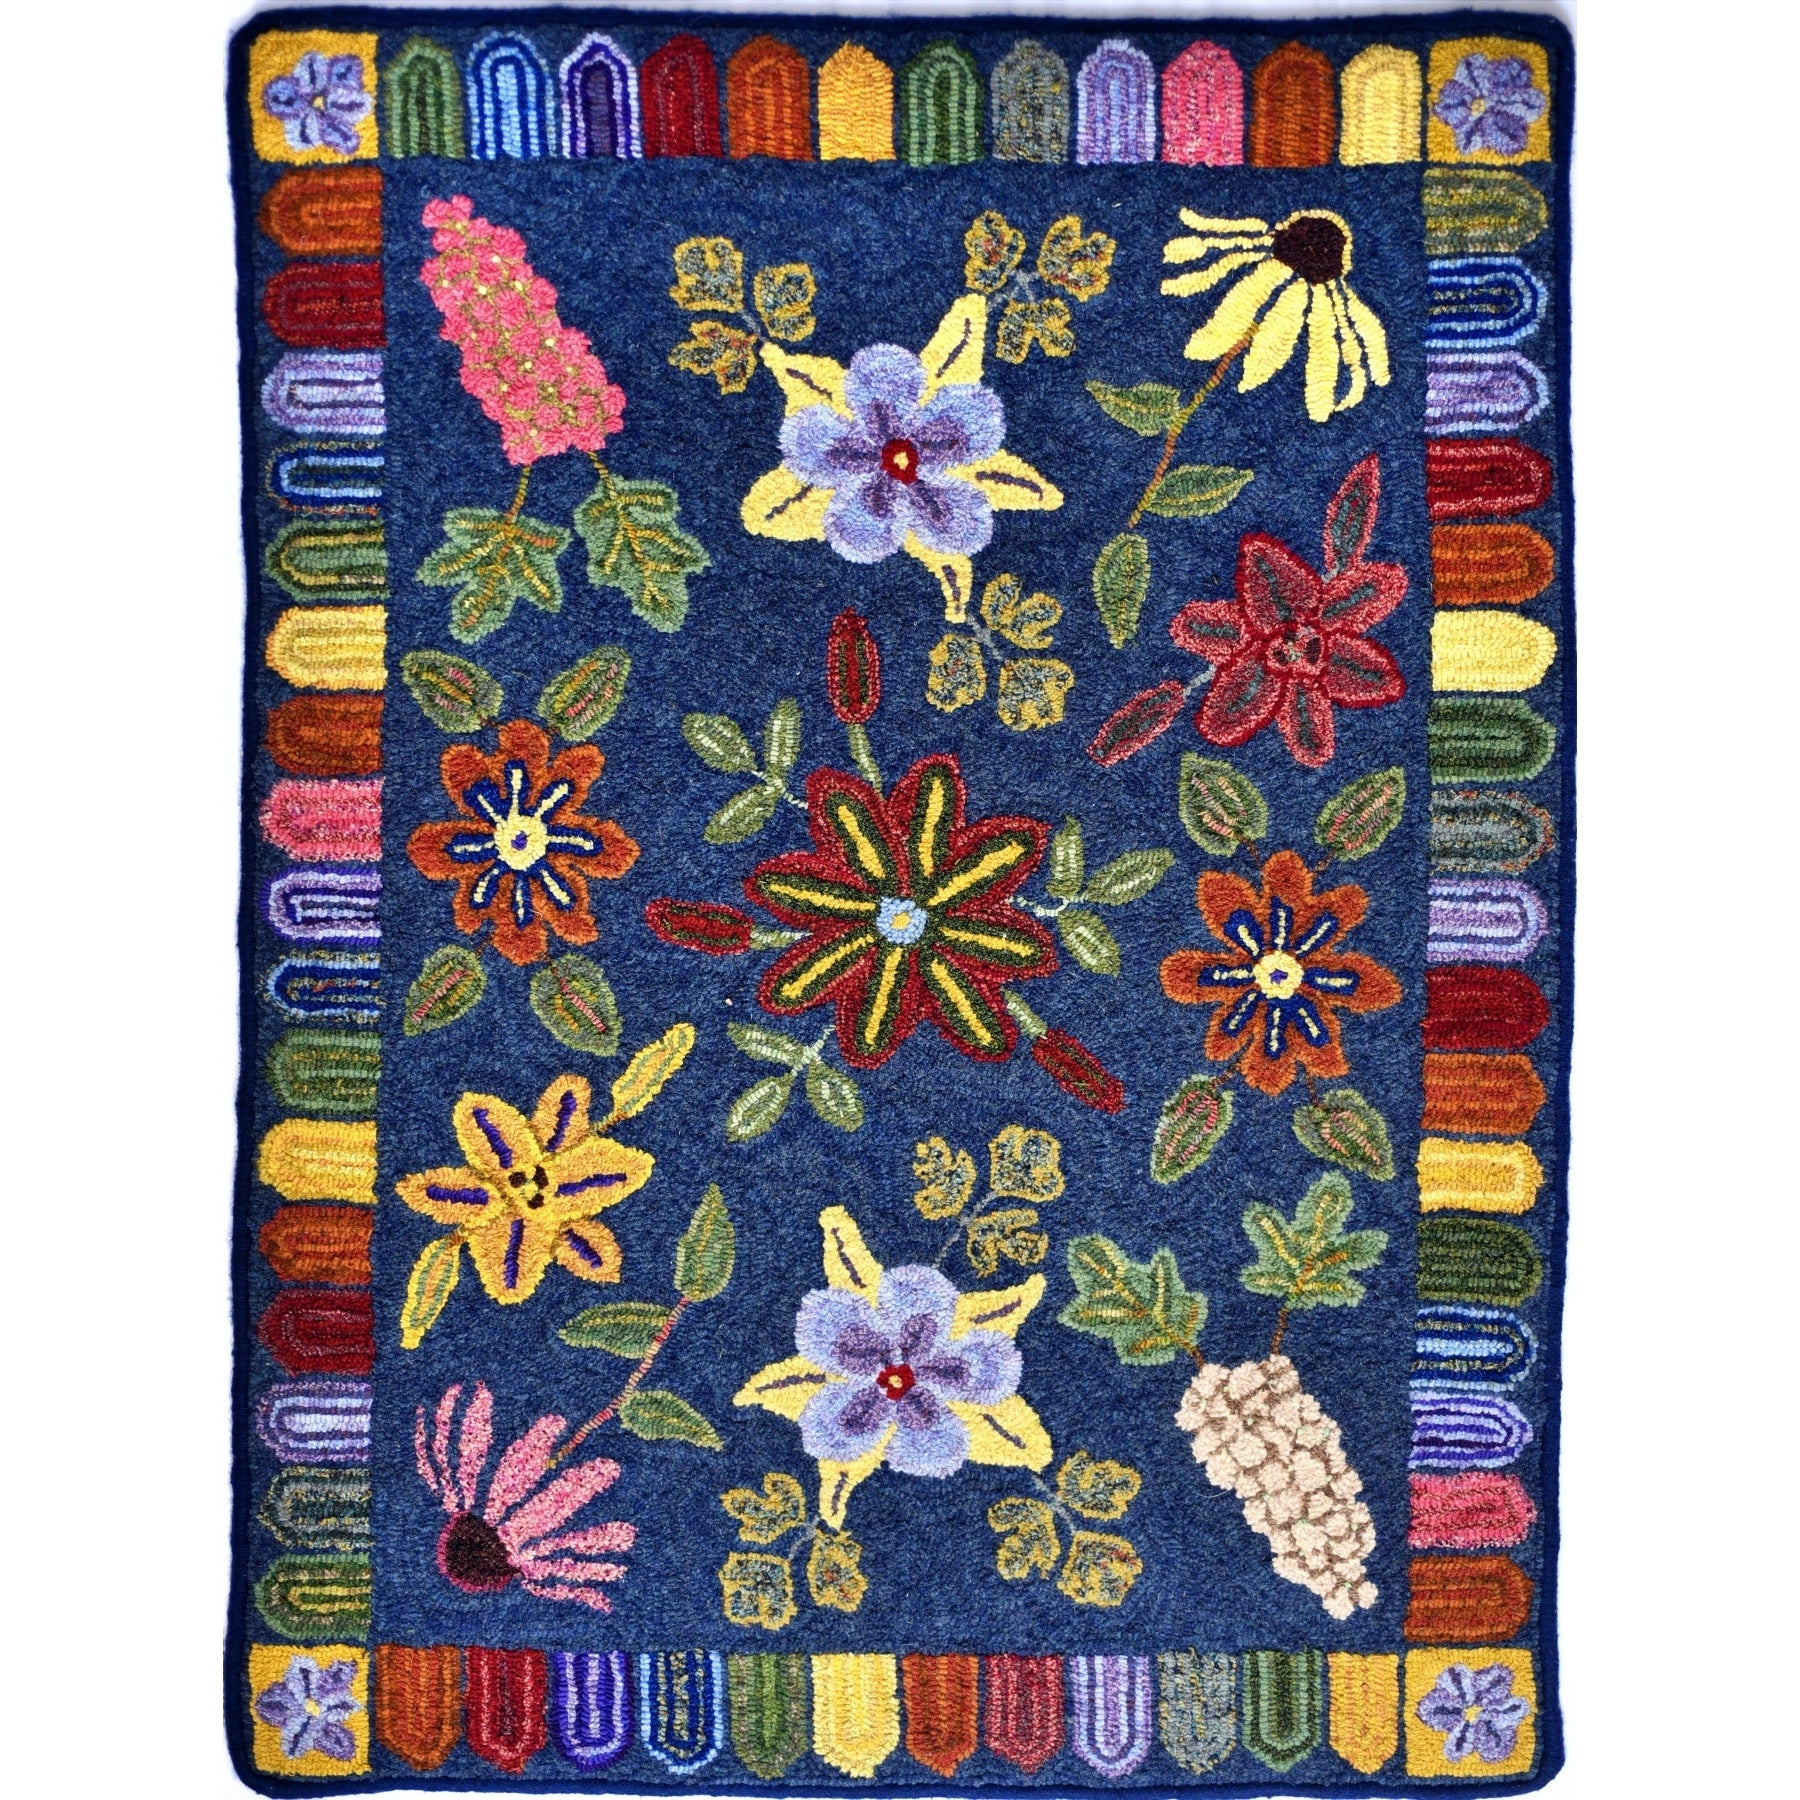 Antique Flowers, rug hooked by John Leonard